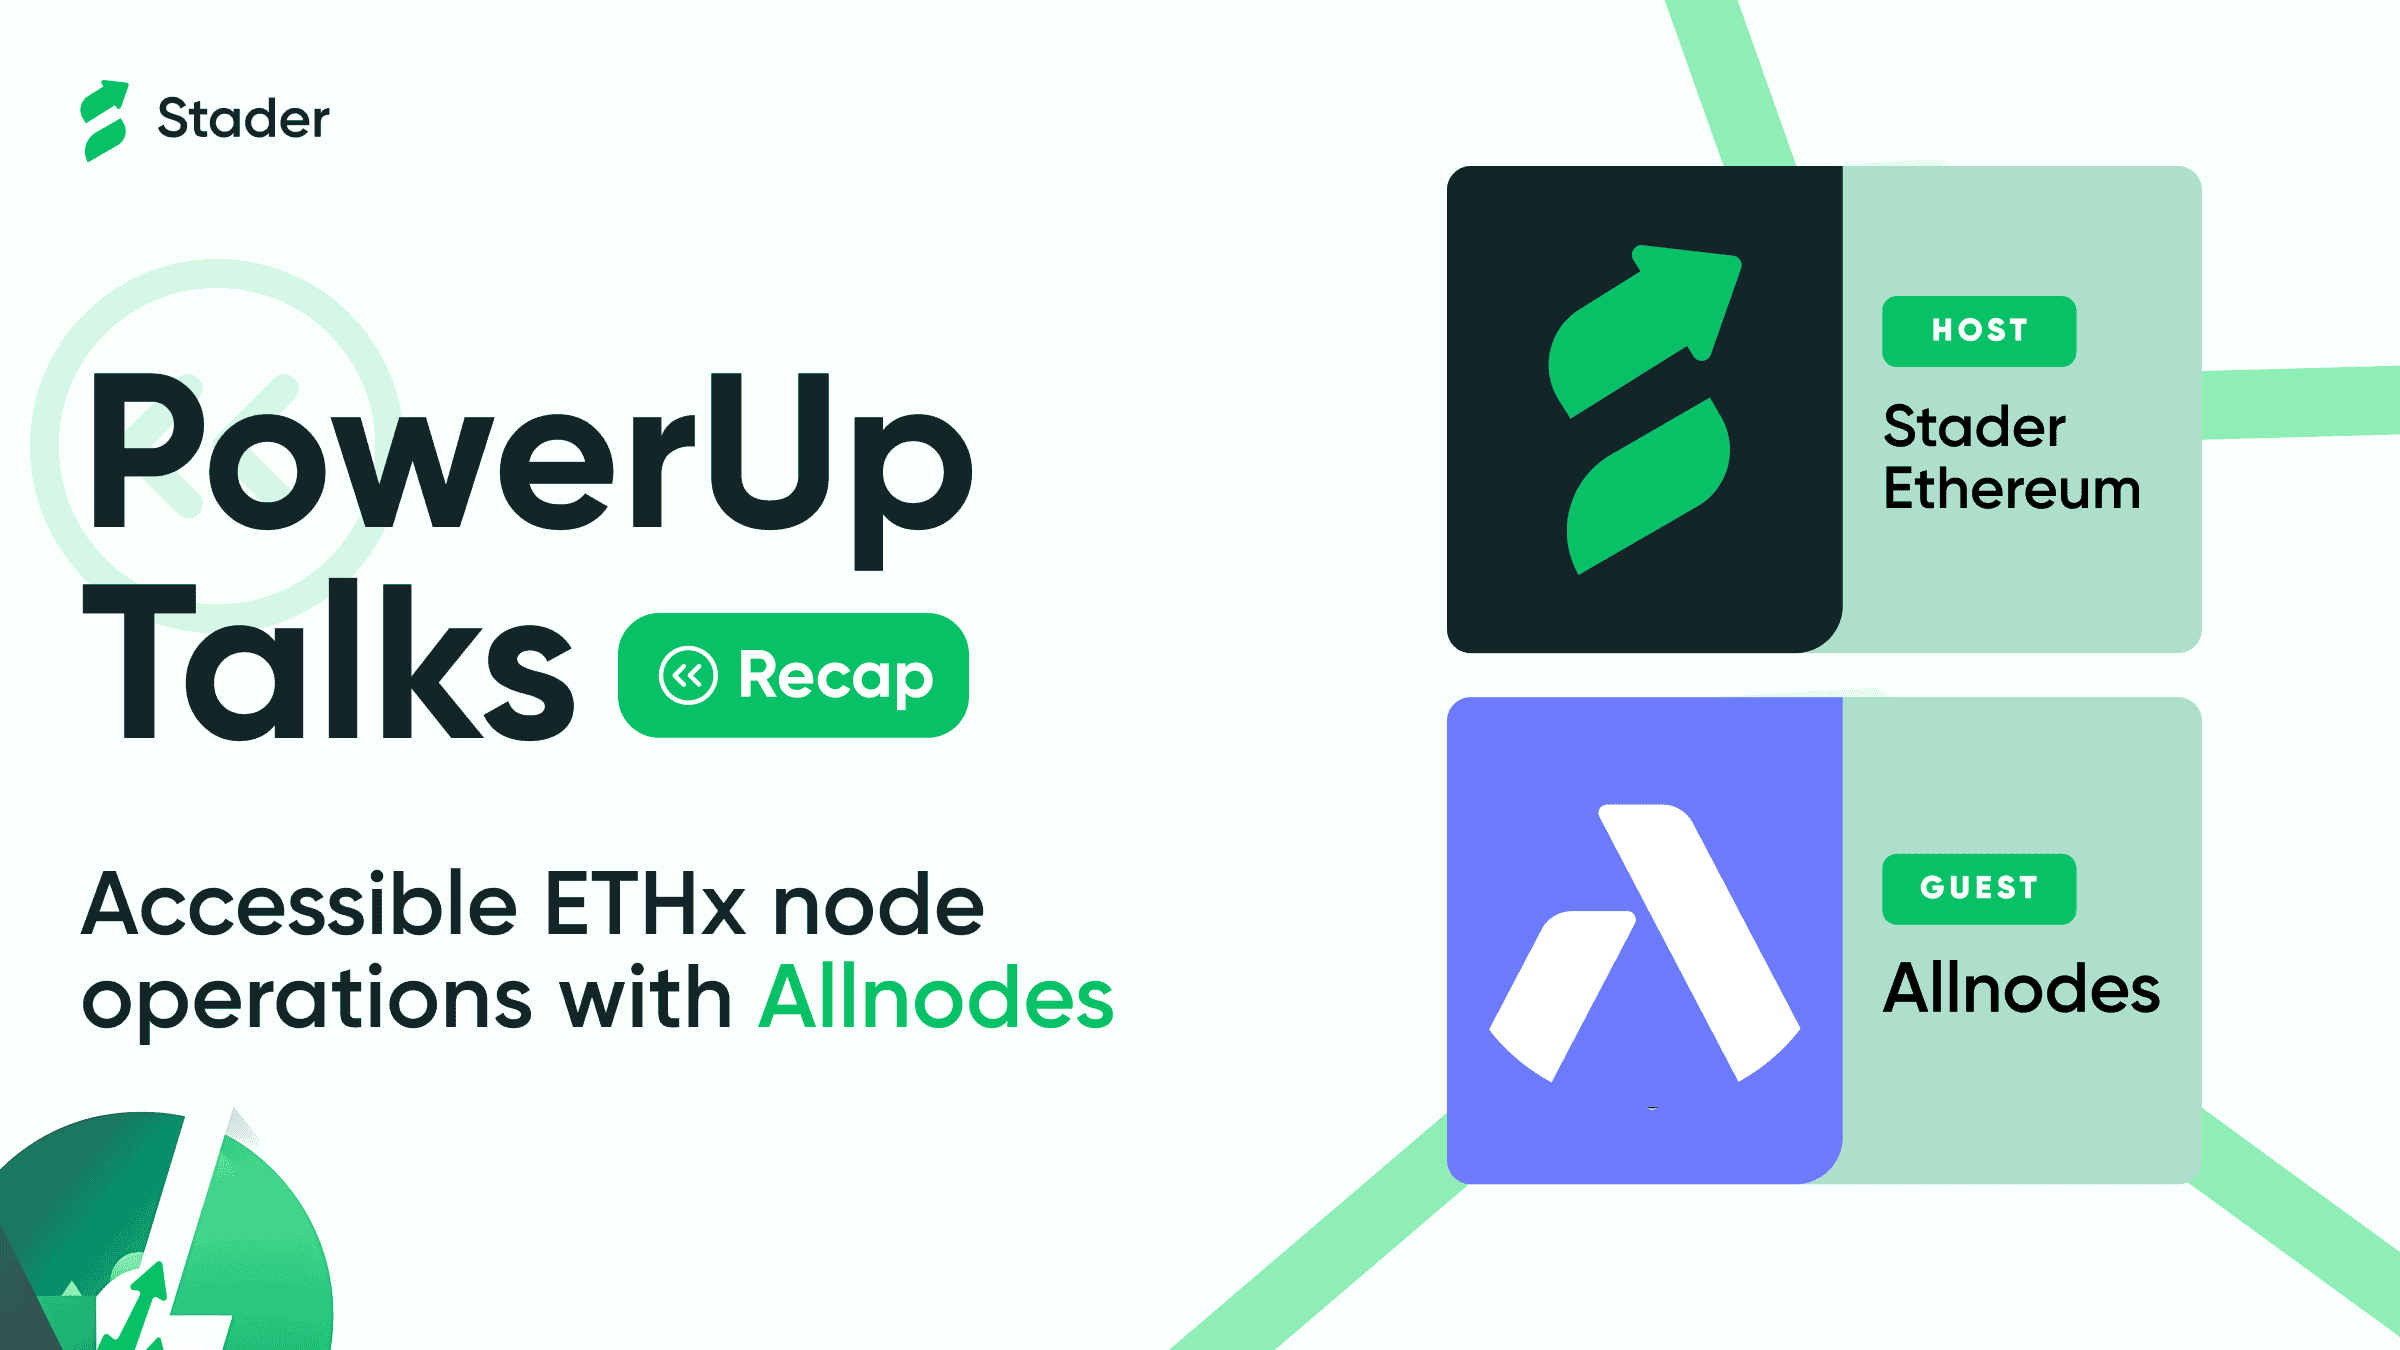 PowerUp Talks with Allnodes: A Recap